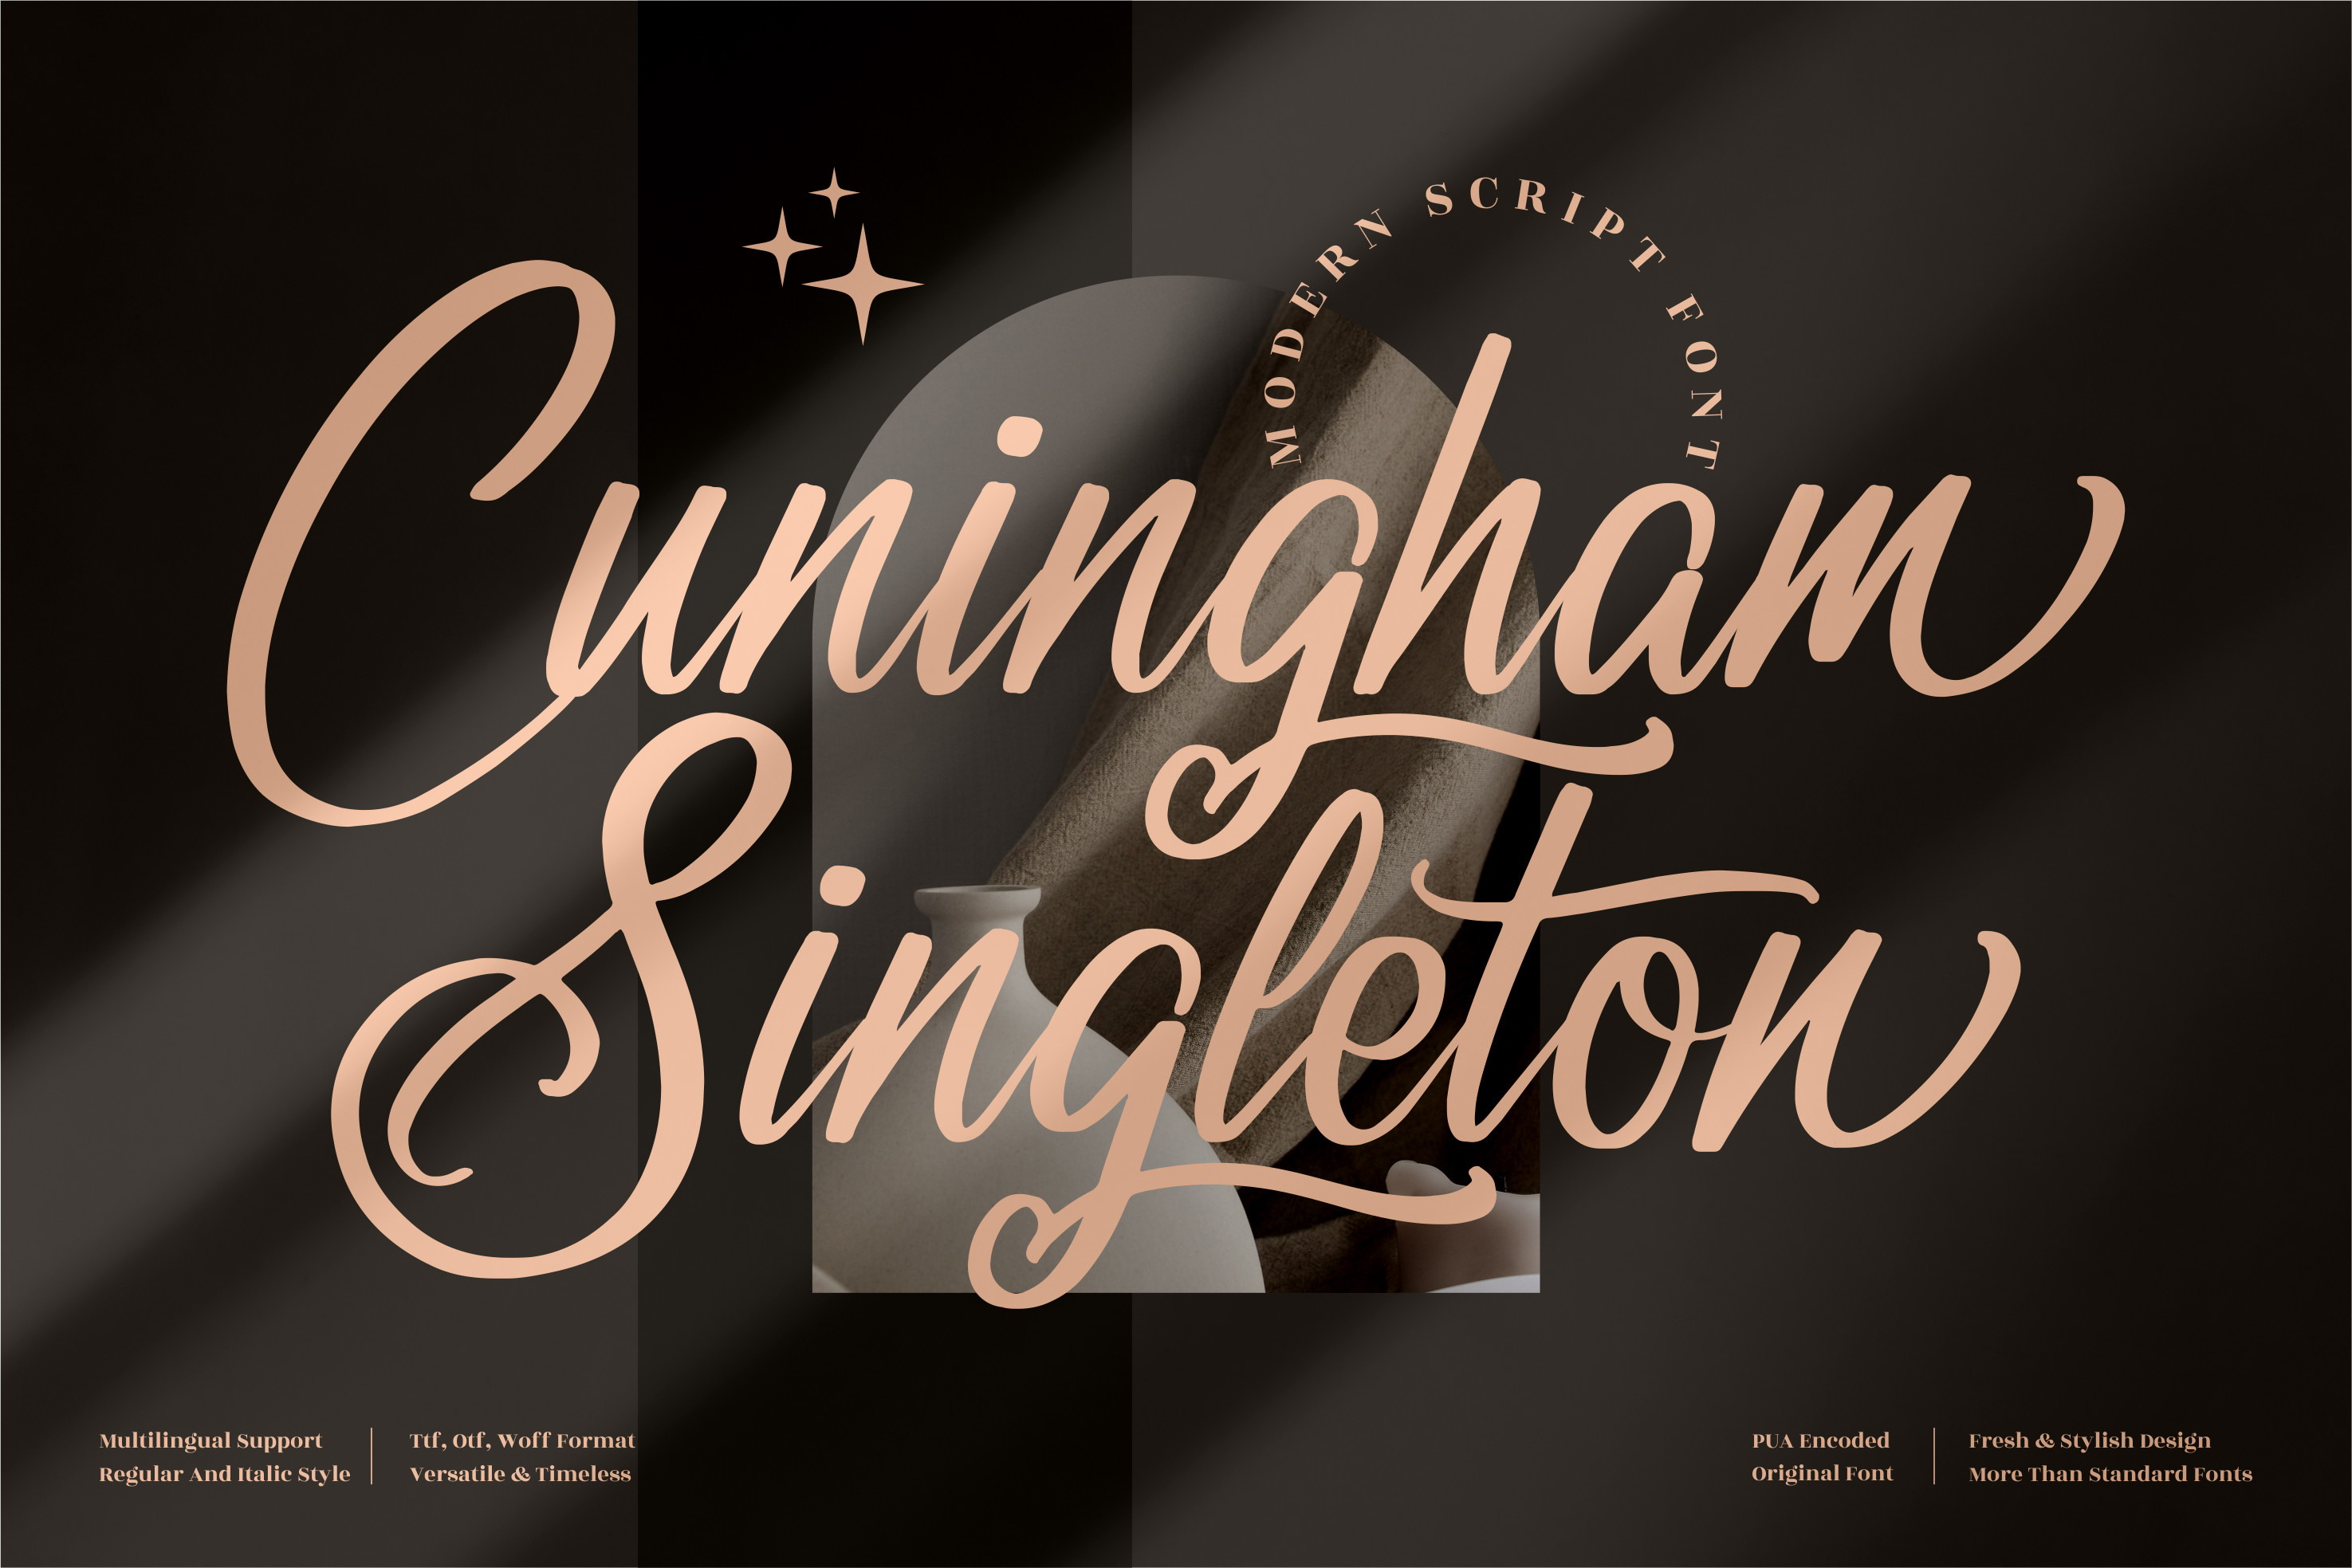 Cuningham Singleton